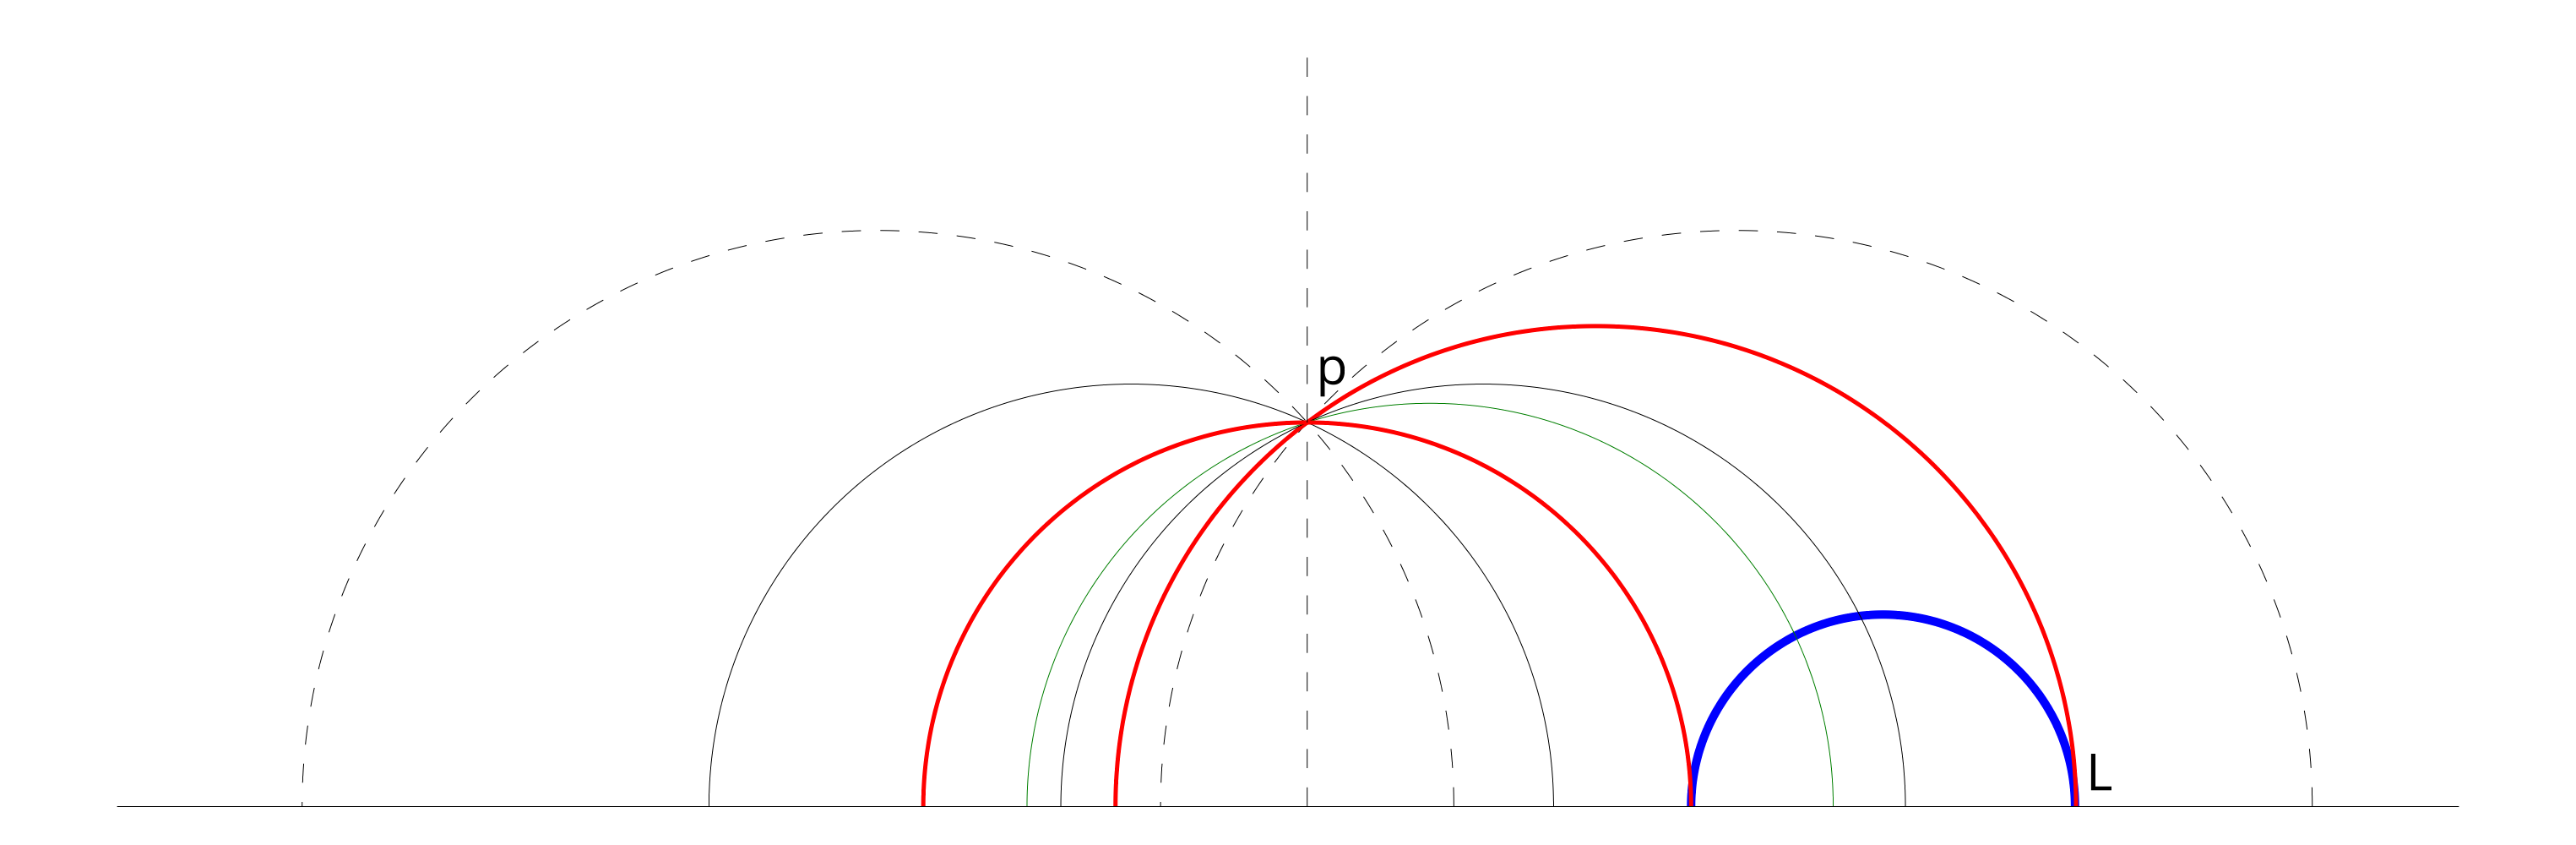 The hyperbolic plane